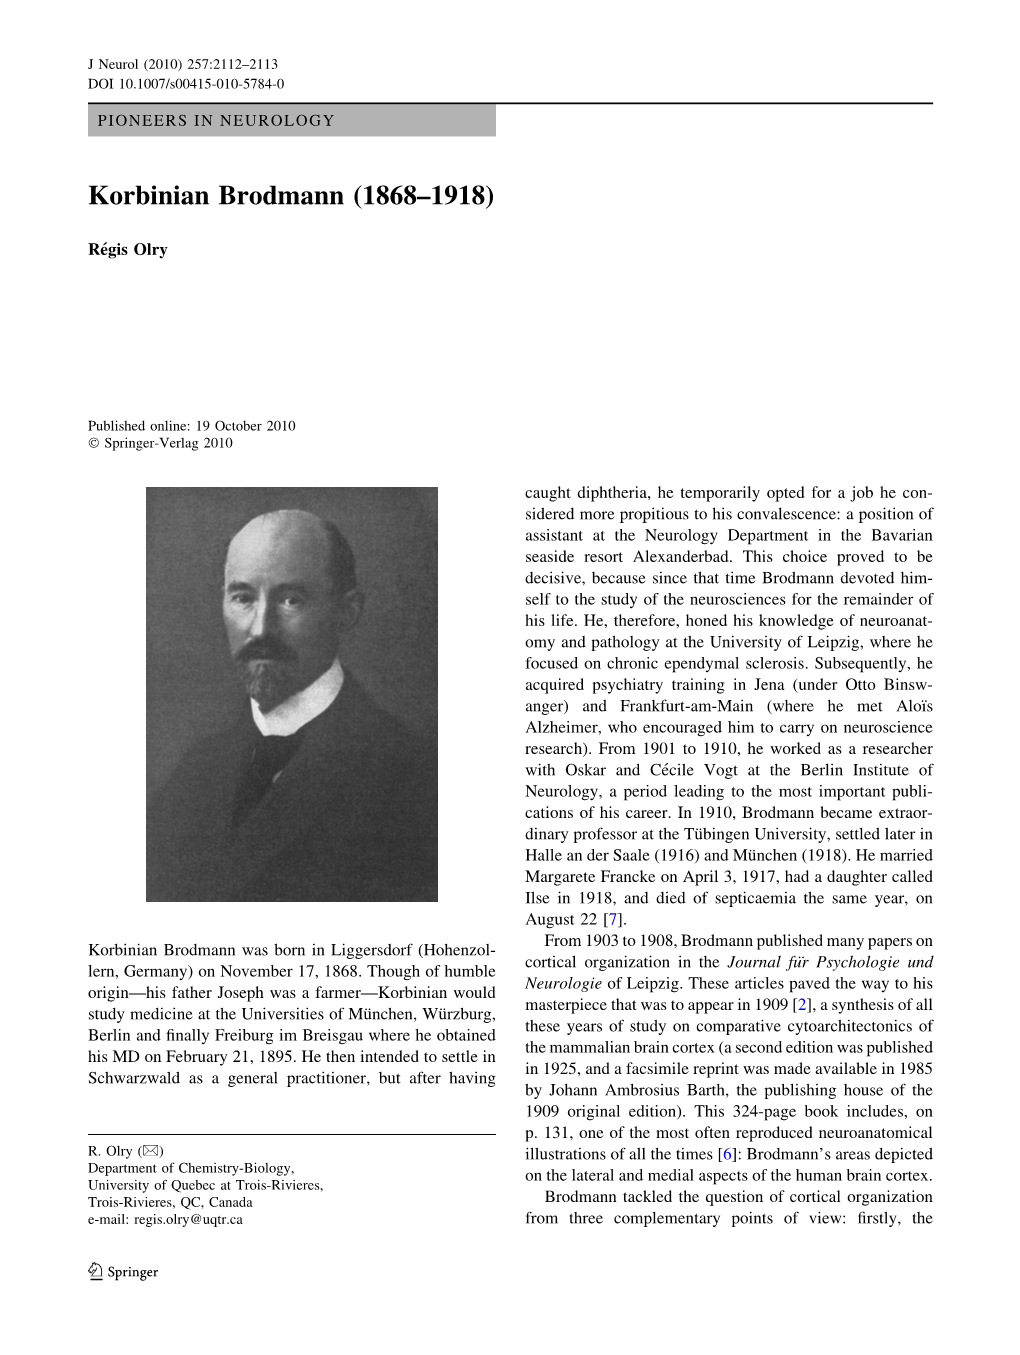 Korbinian Brodmann (1868–1918)